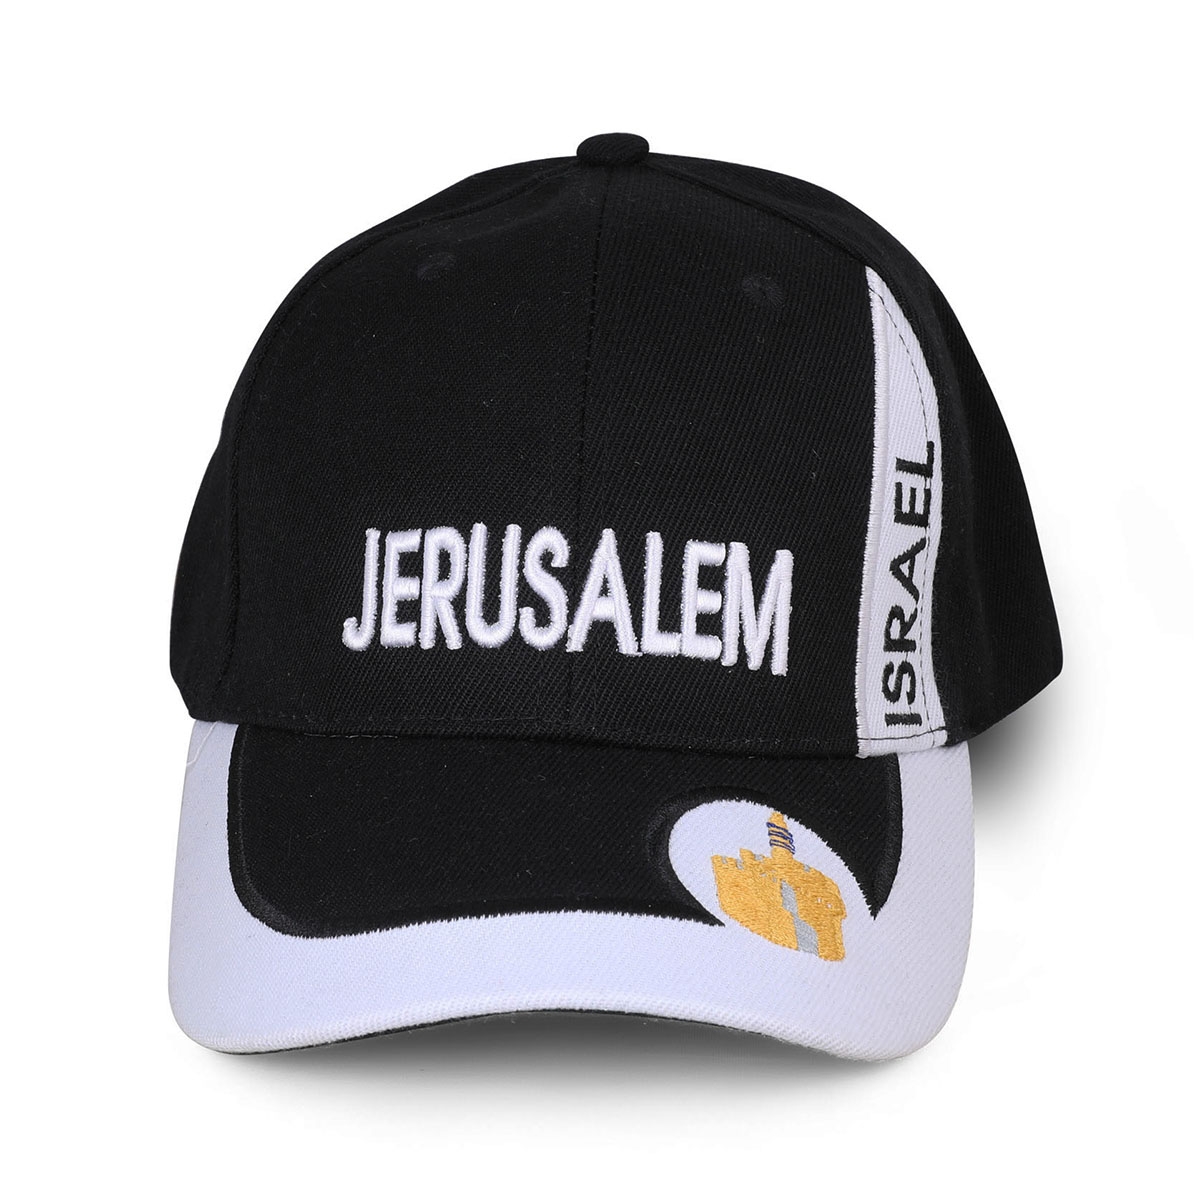 Jerusalem Israel Baseball Cap – Black and White  - 1